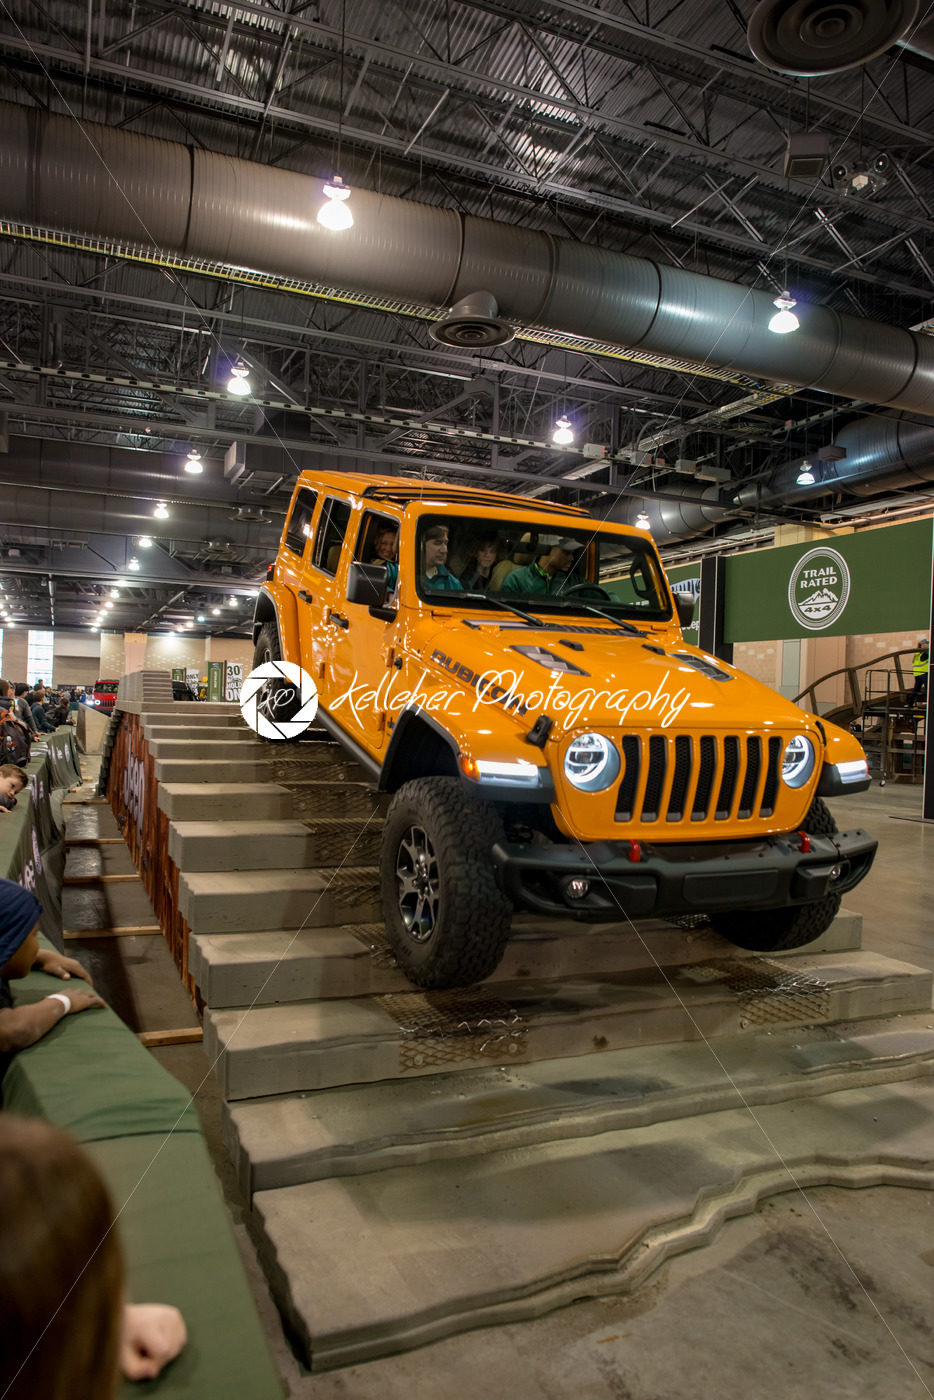 PHILADELPHIA, PA – Feb 3: Jeep at the 2018 Philadelphia Auto Show - Kelleher Photography Store